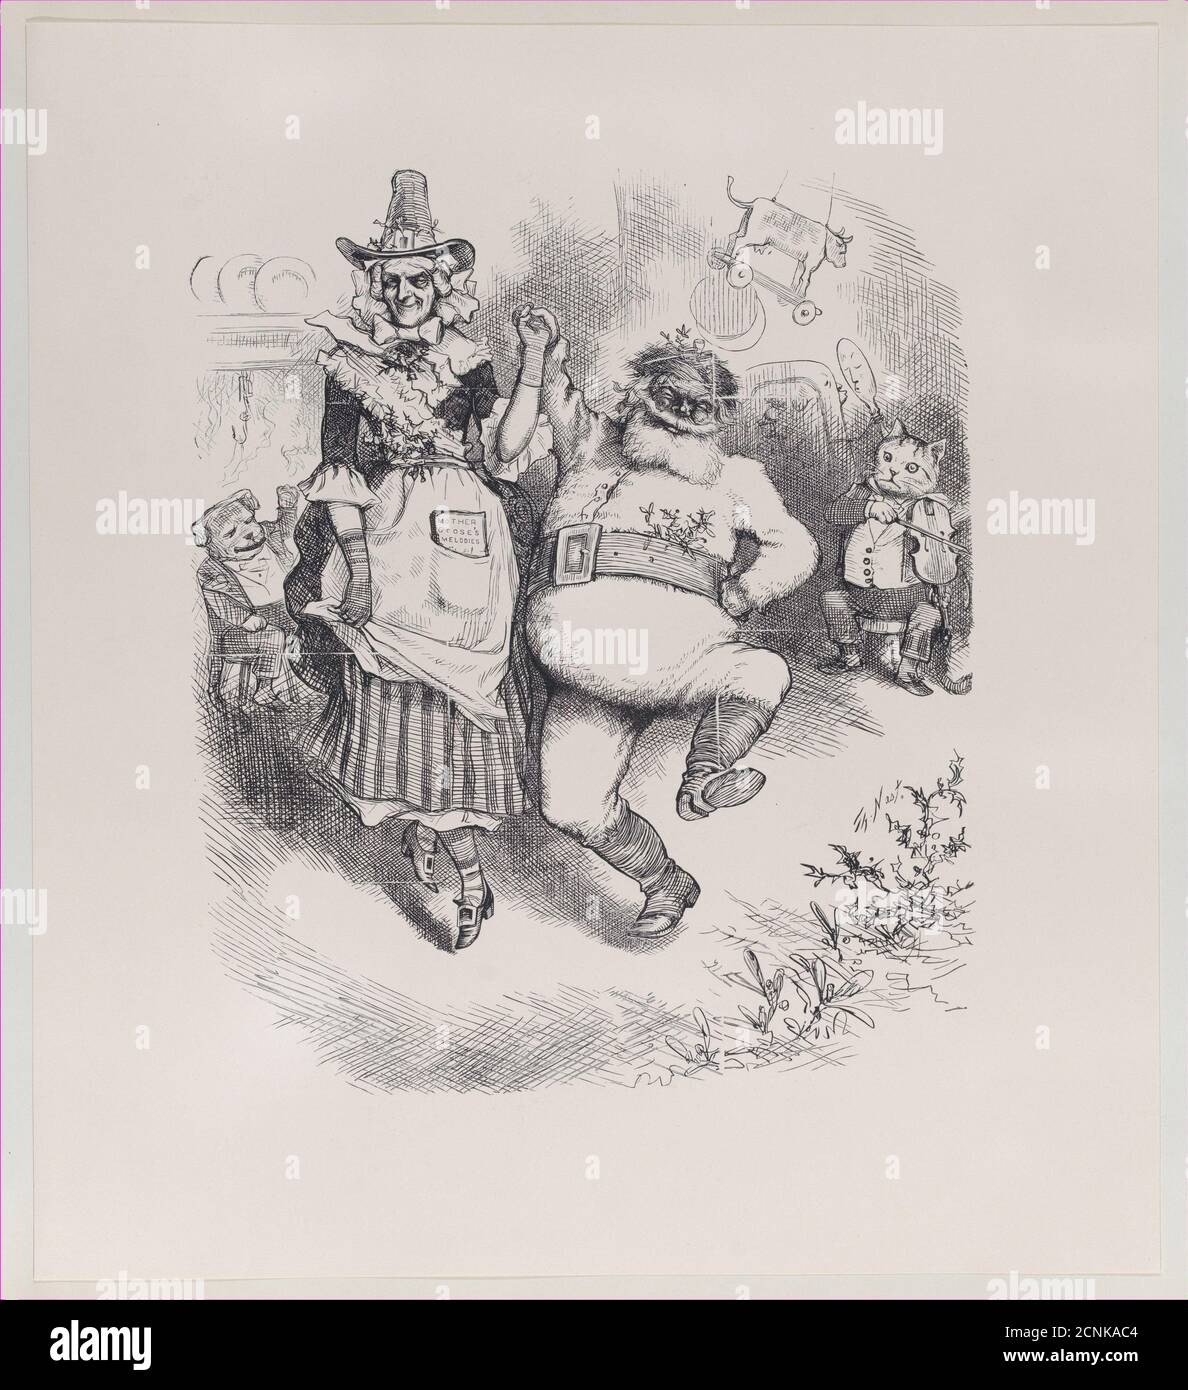 A Merry Christmas, January 3, 1880. Stock Photo